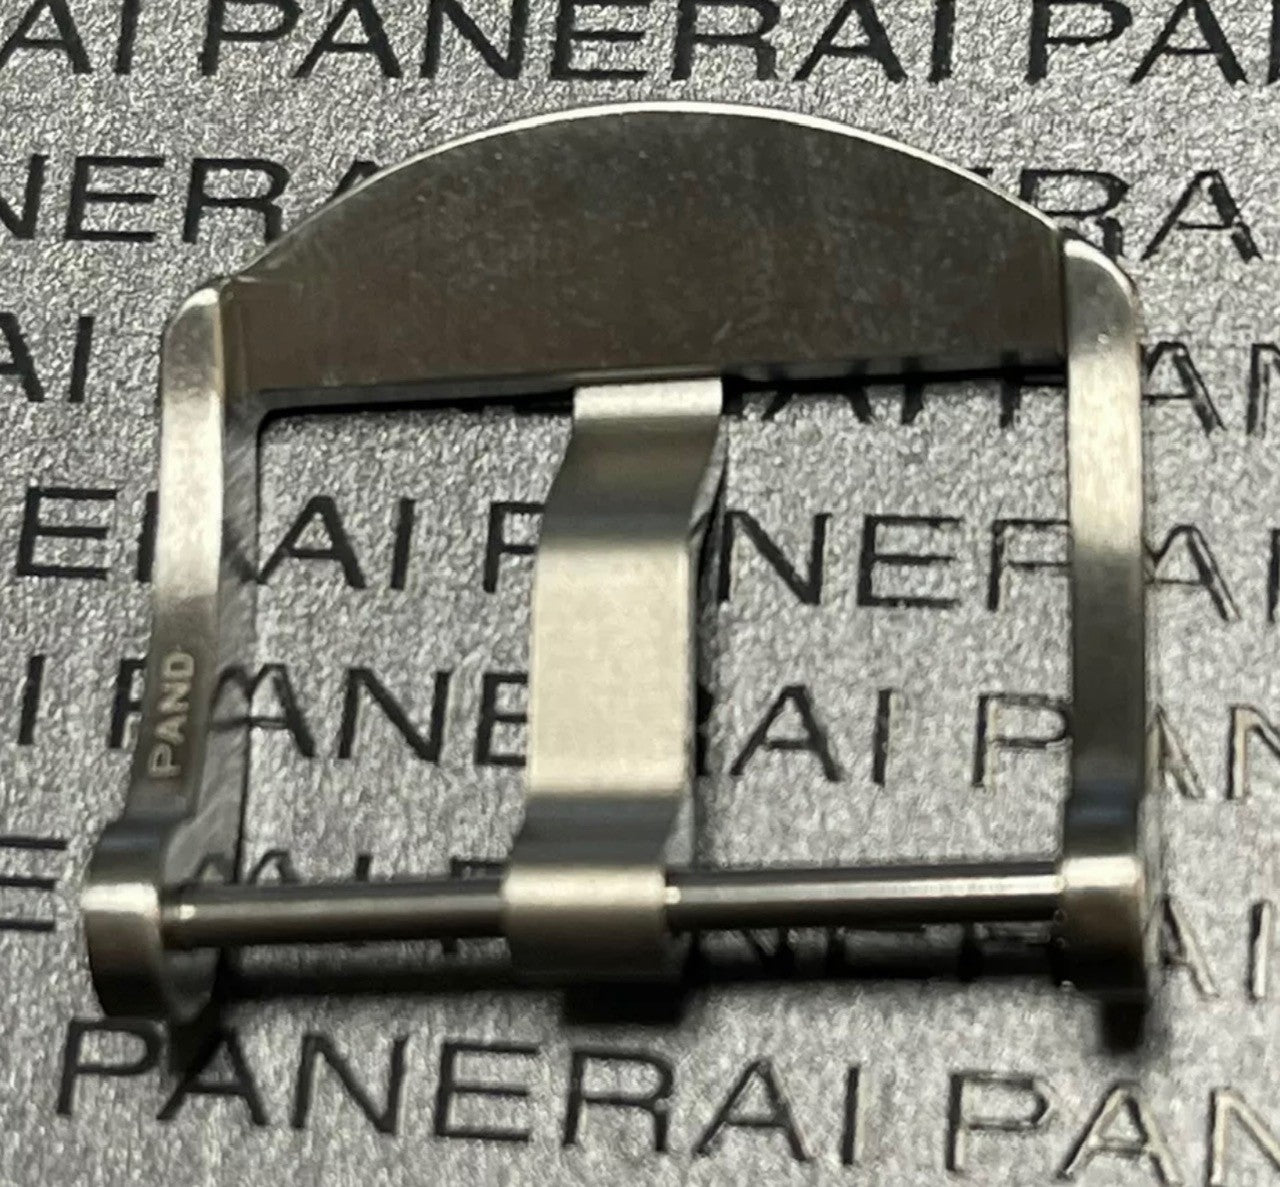 Panerai Brushed Stainless Steel Thumbnail Tang Buckle